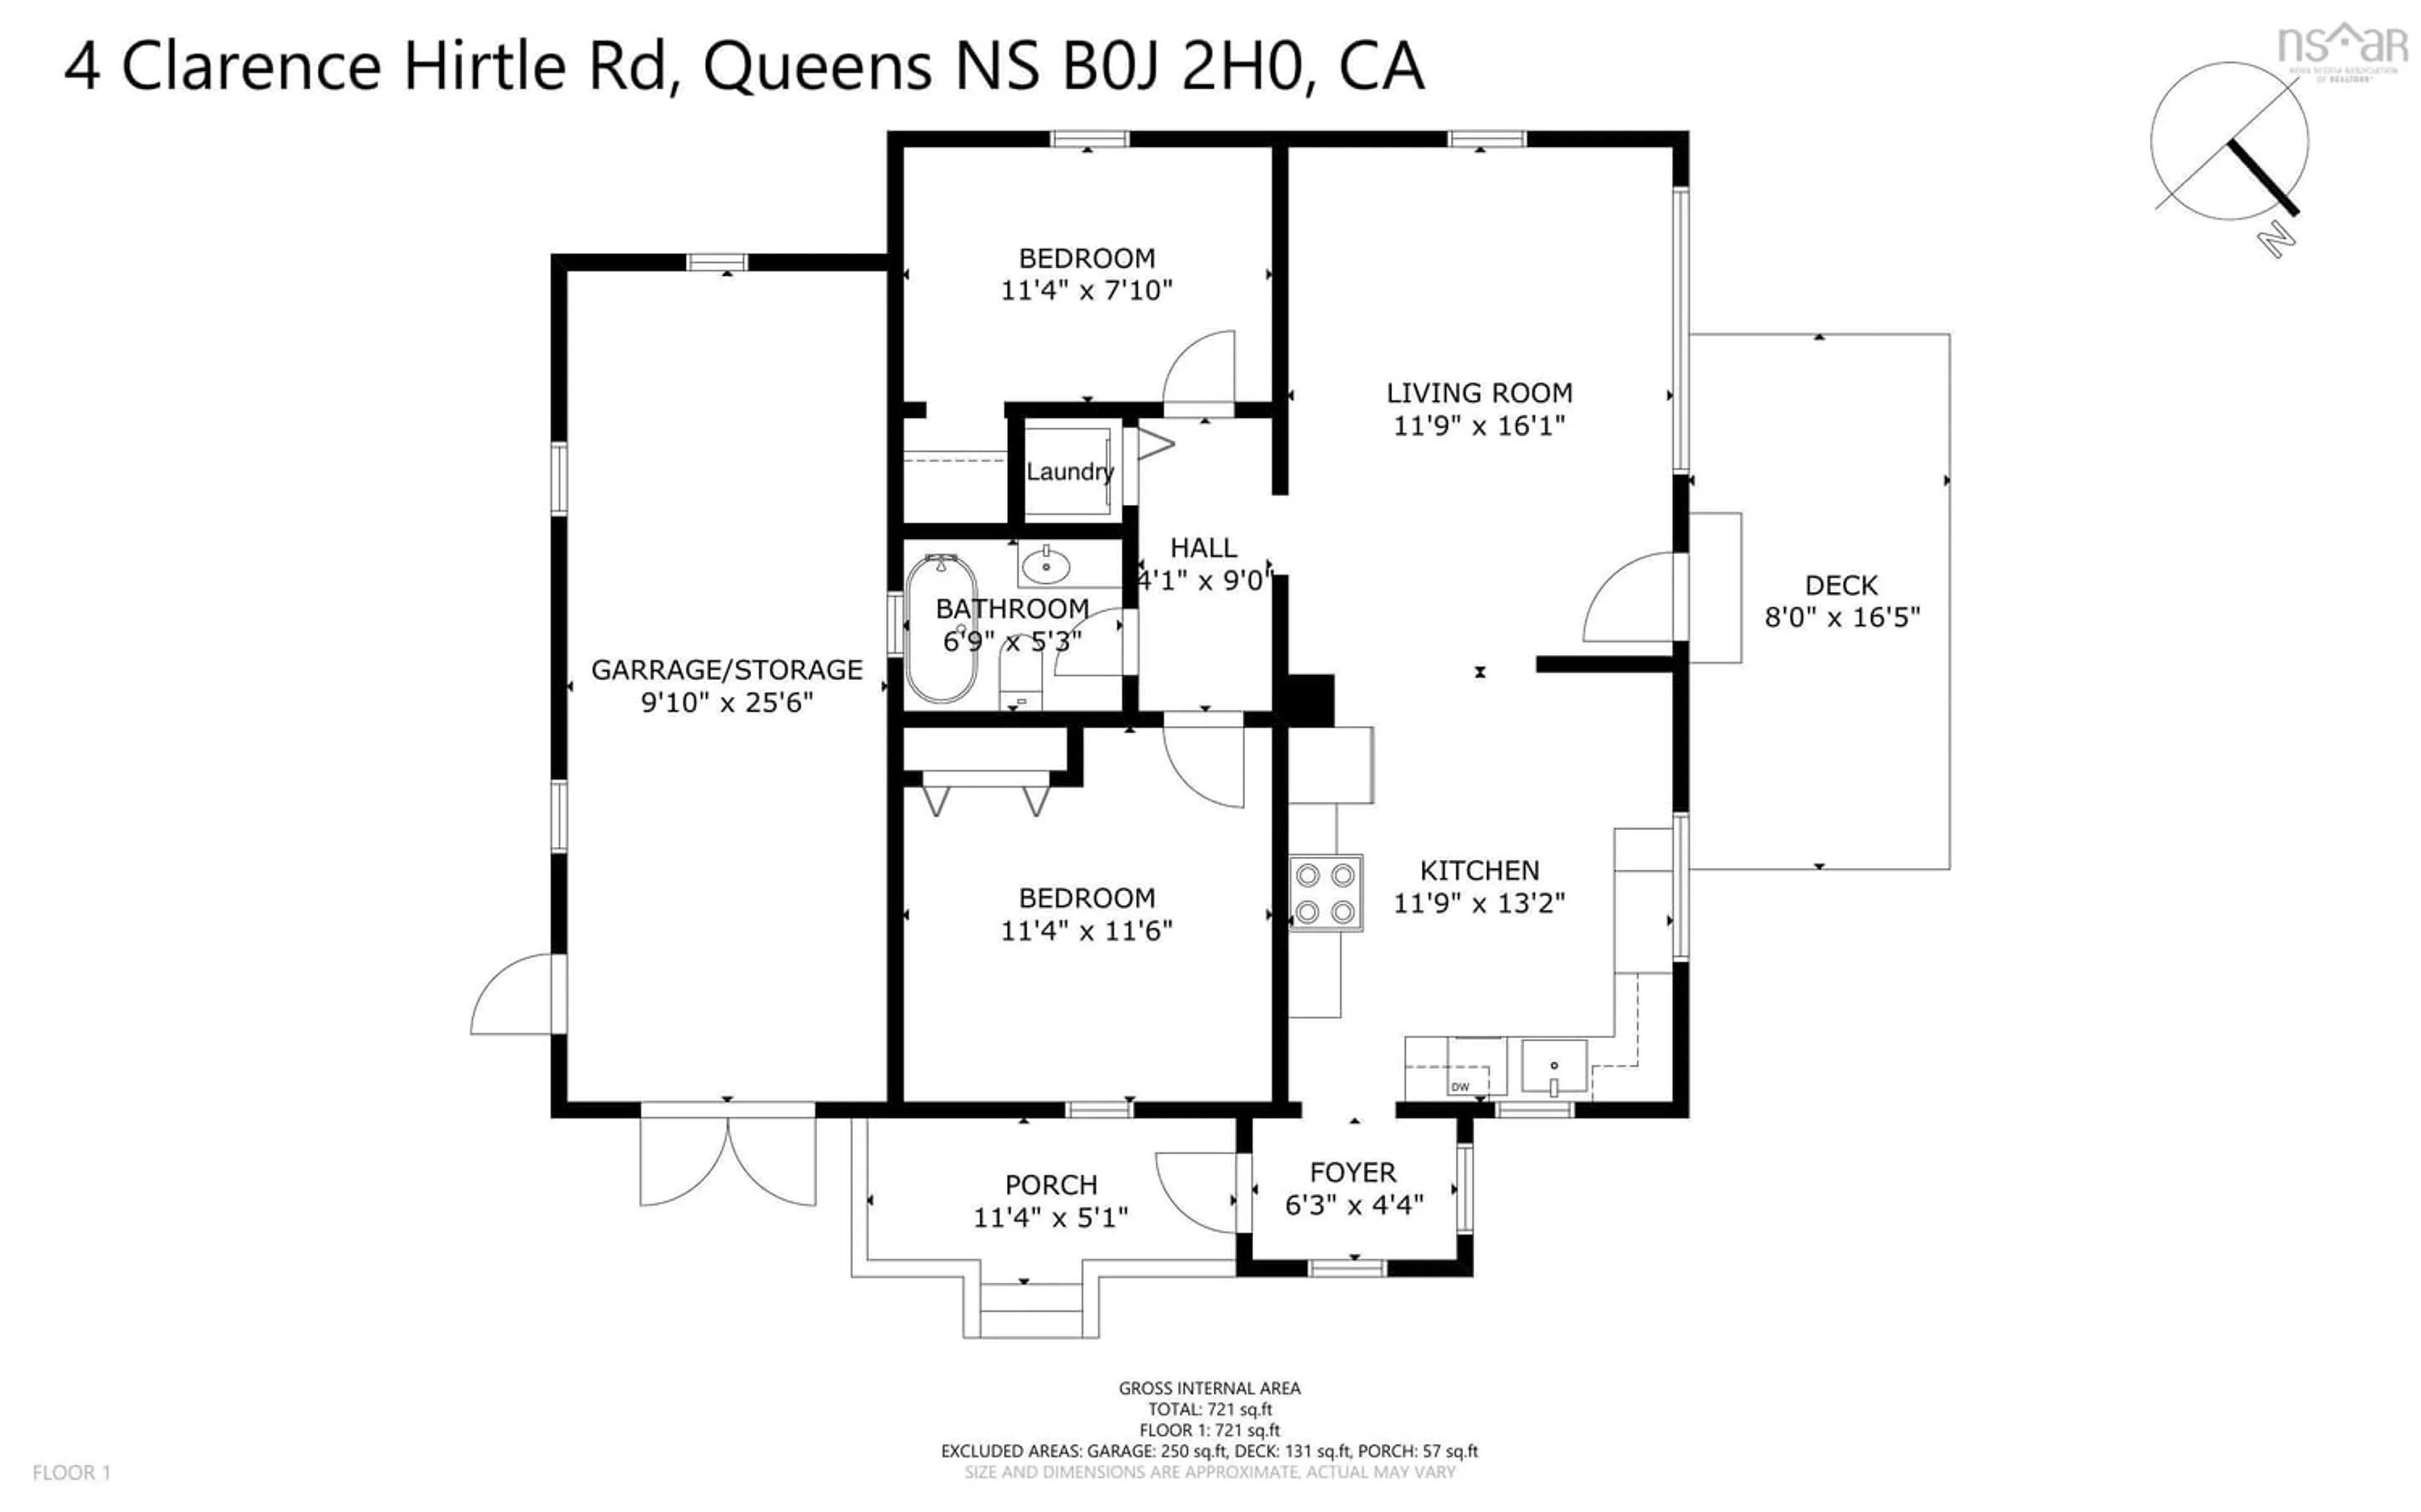 Floor plan for 4 Clarence Hirtle Rd, Charleston Nova Scotia B0J 2H0